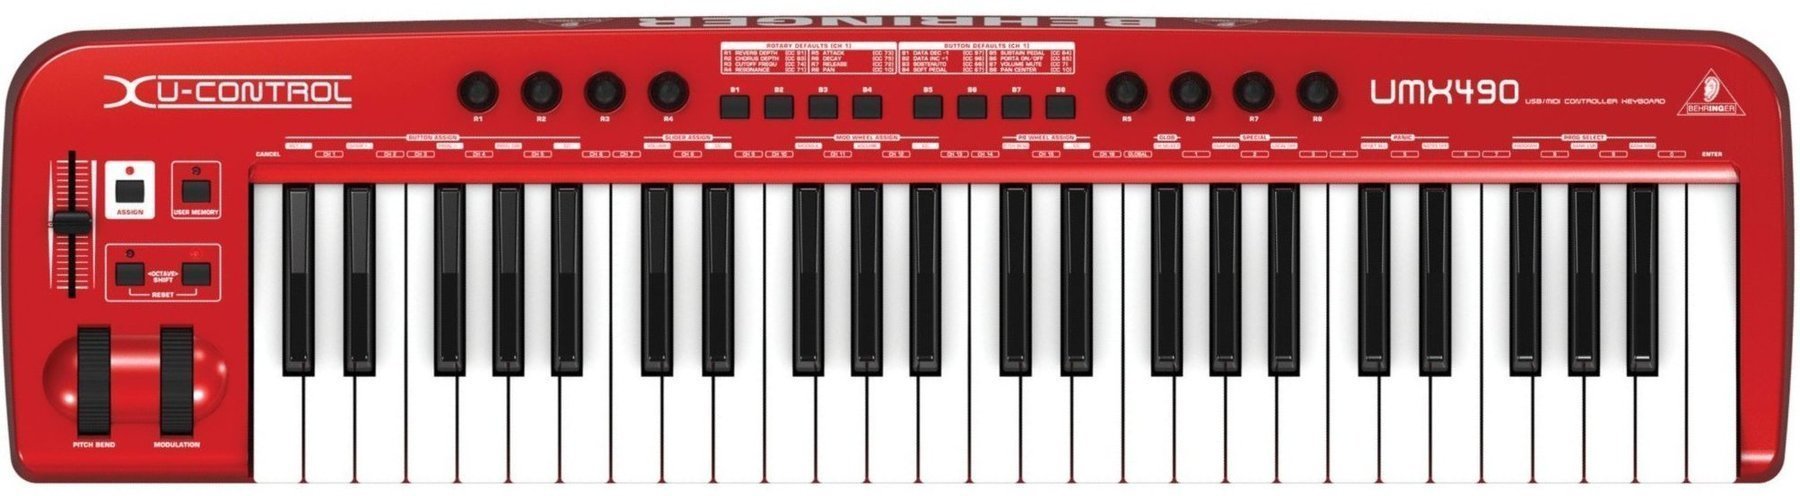 Master Keyboard Behringer UMX 490 U-CONTROL